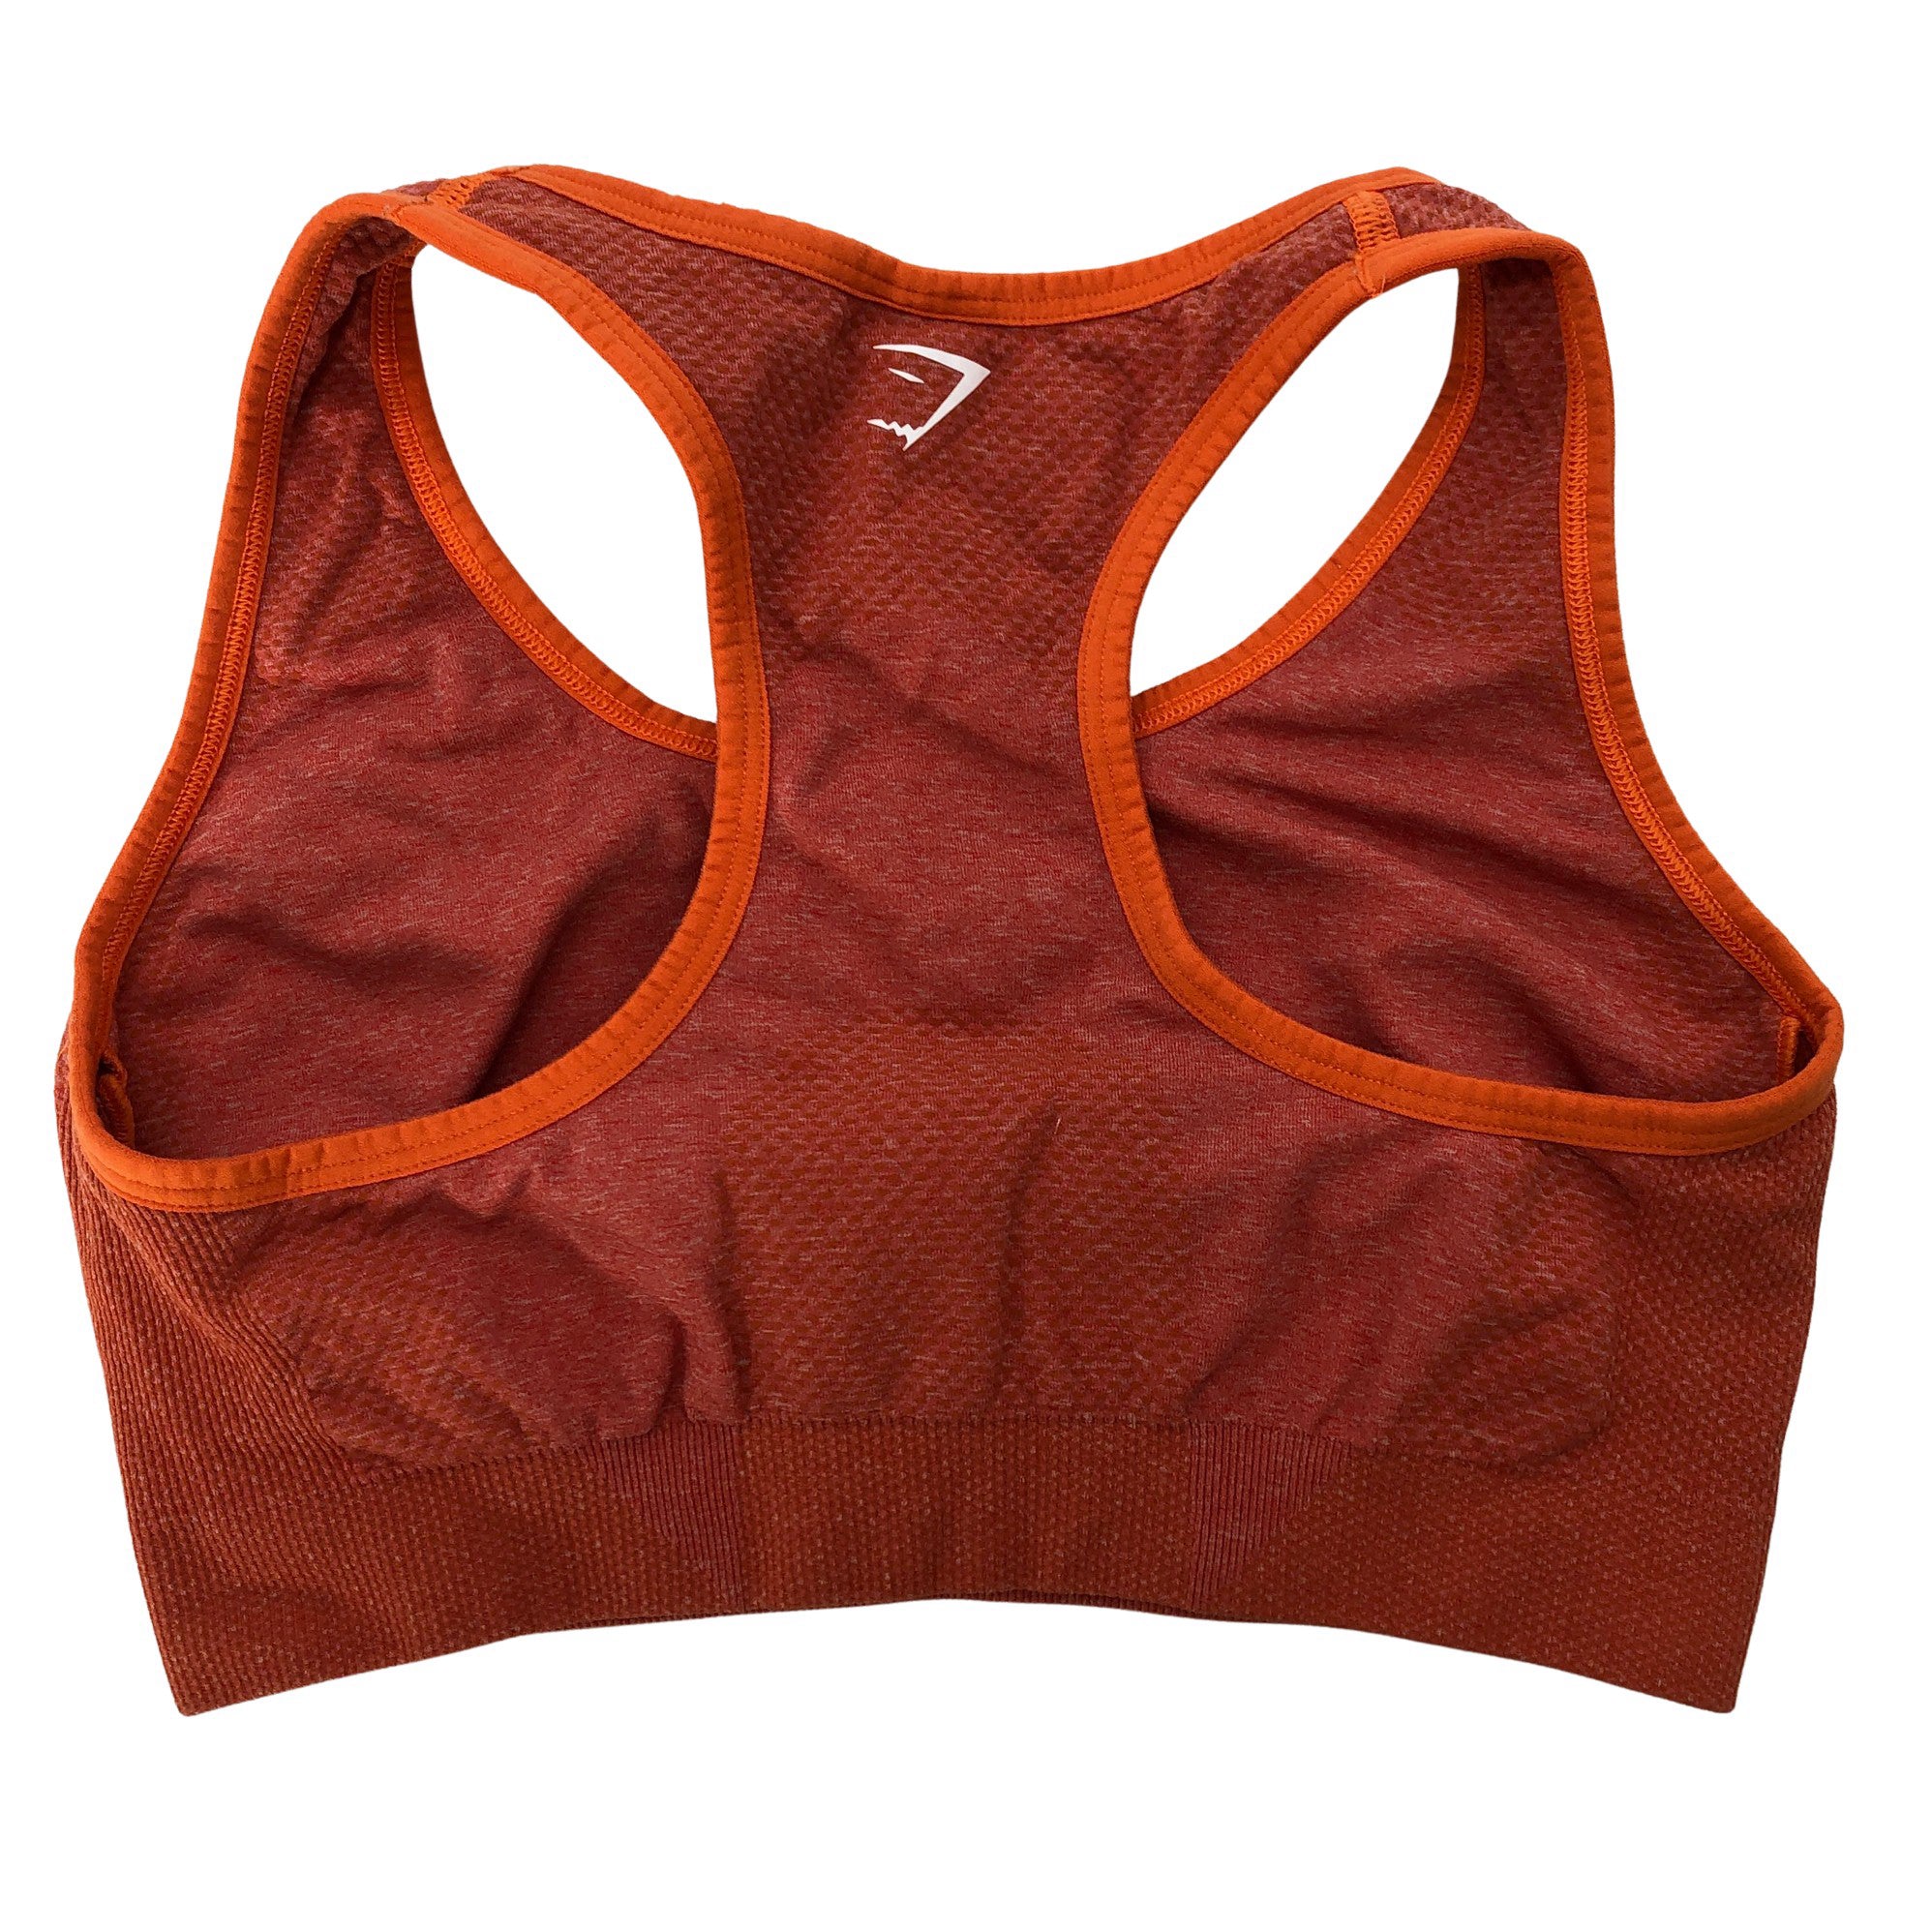 Women's Gymshark Sports top, size 36 (Orange)